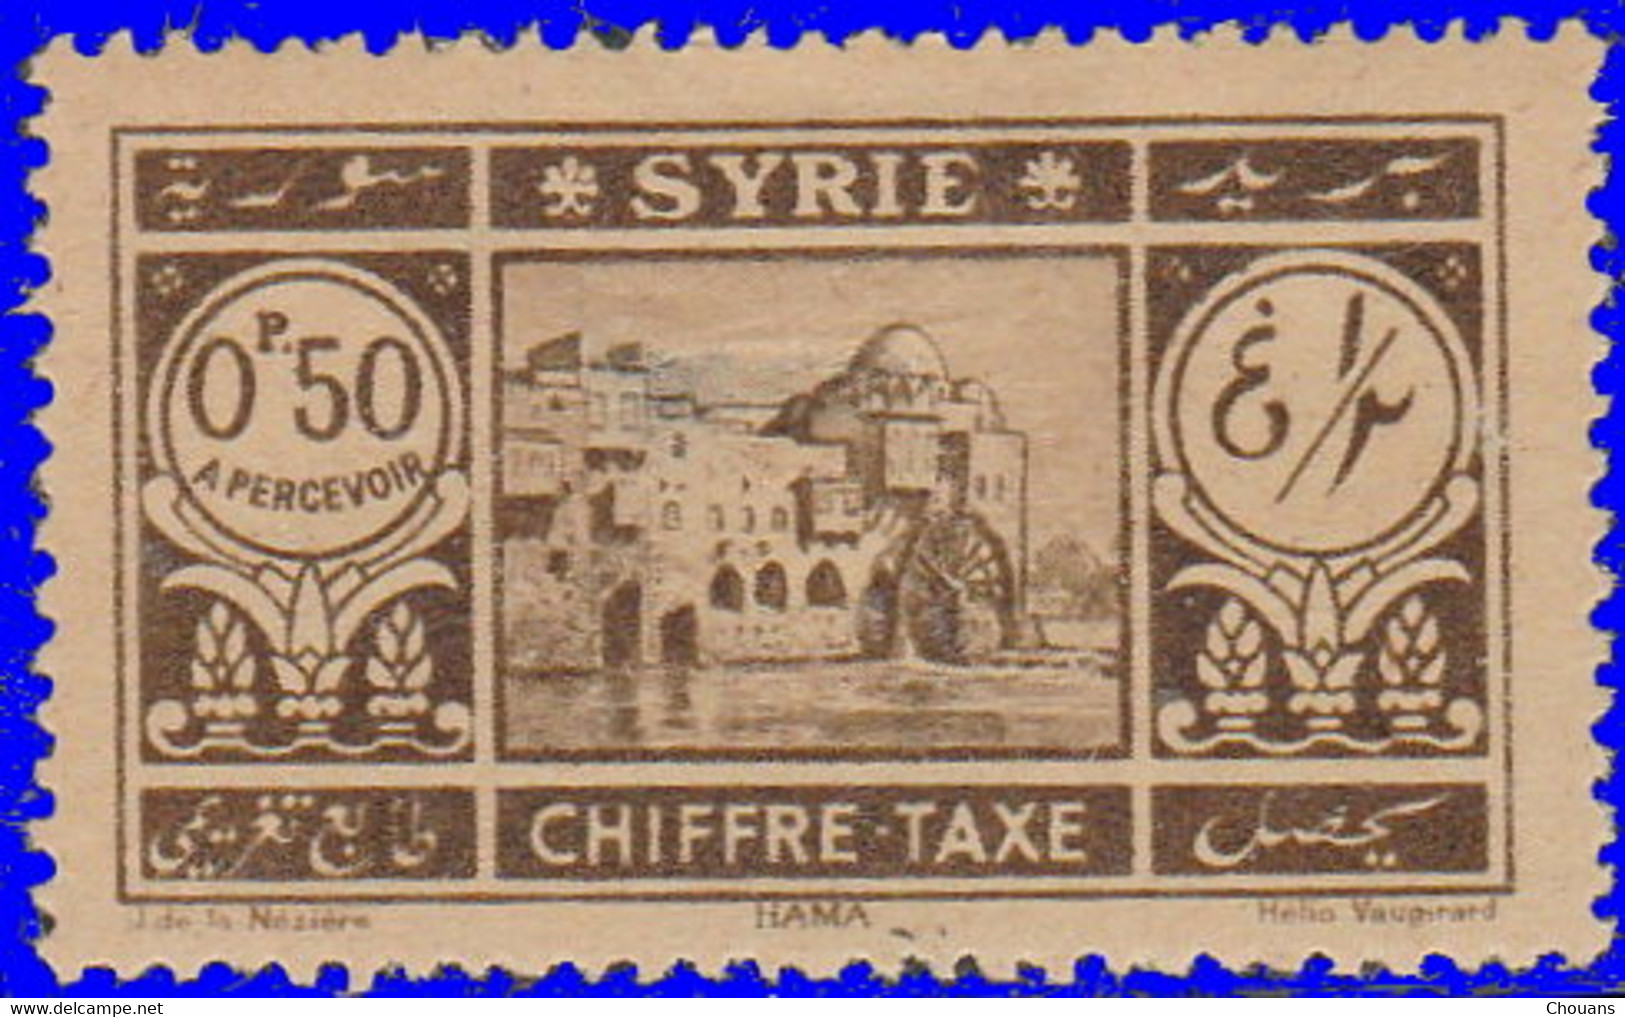 Syrie Taxe 1925. ~ T 32* - Hama - Segnatasse